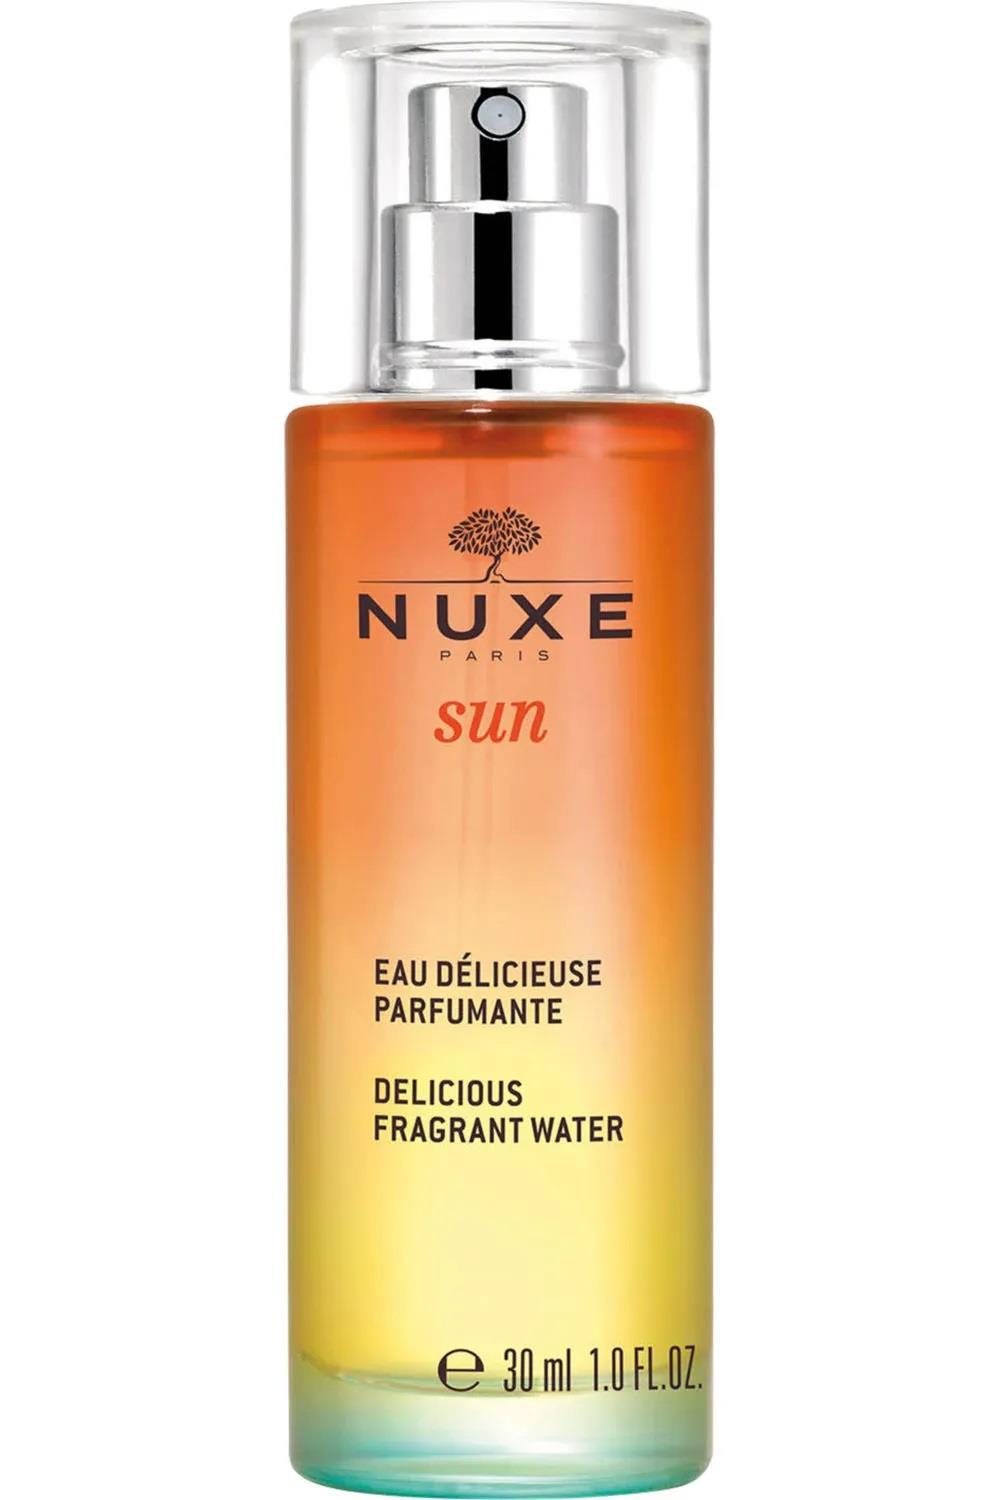 Nuxe Sun Eau Delicieuse Parfumant EDP Meyvemsi Kadın Parfüm 30 ml